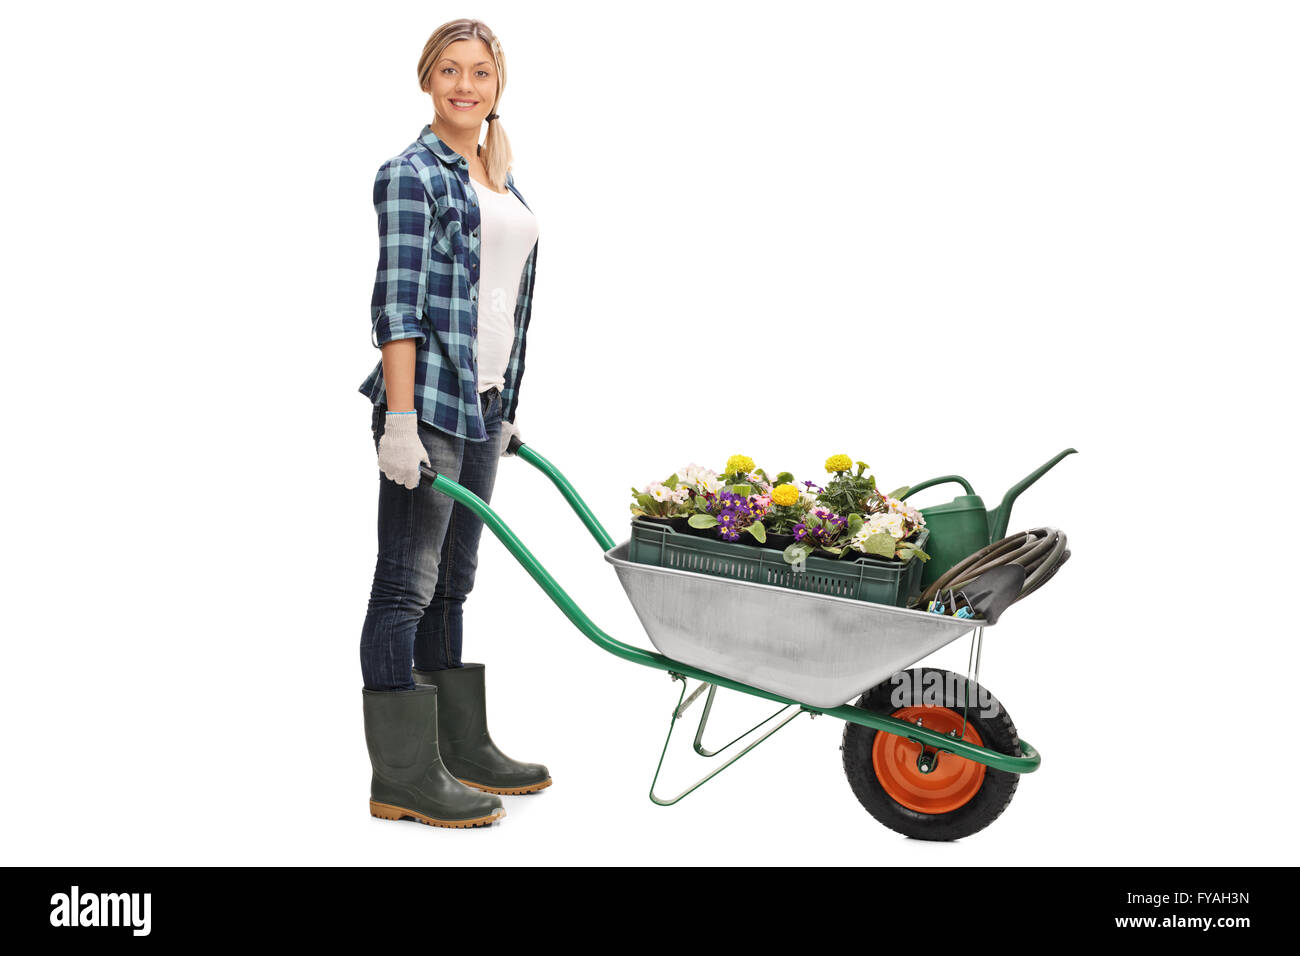 Full length portrait of a female gardener pushing a wheelbarrow full of gardening equipment isolated on white background Stock Photo